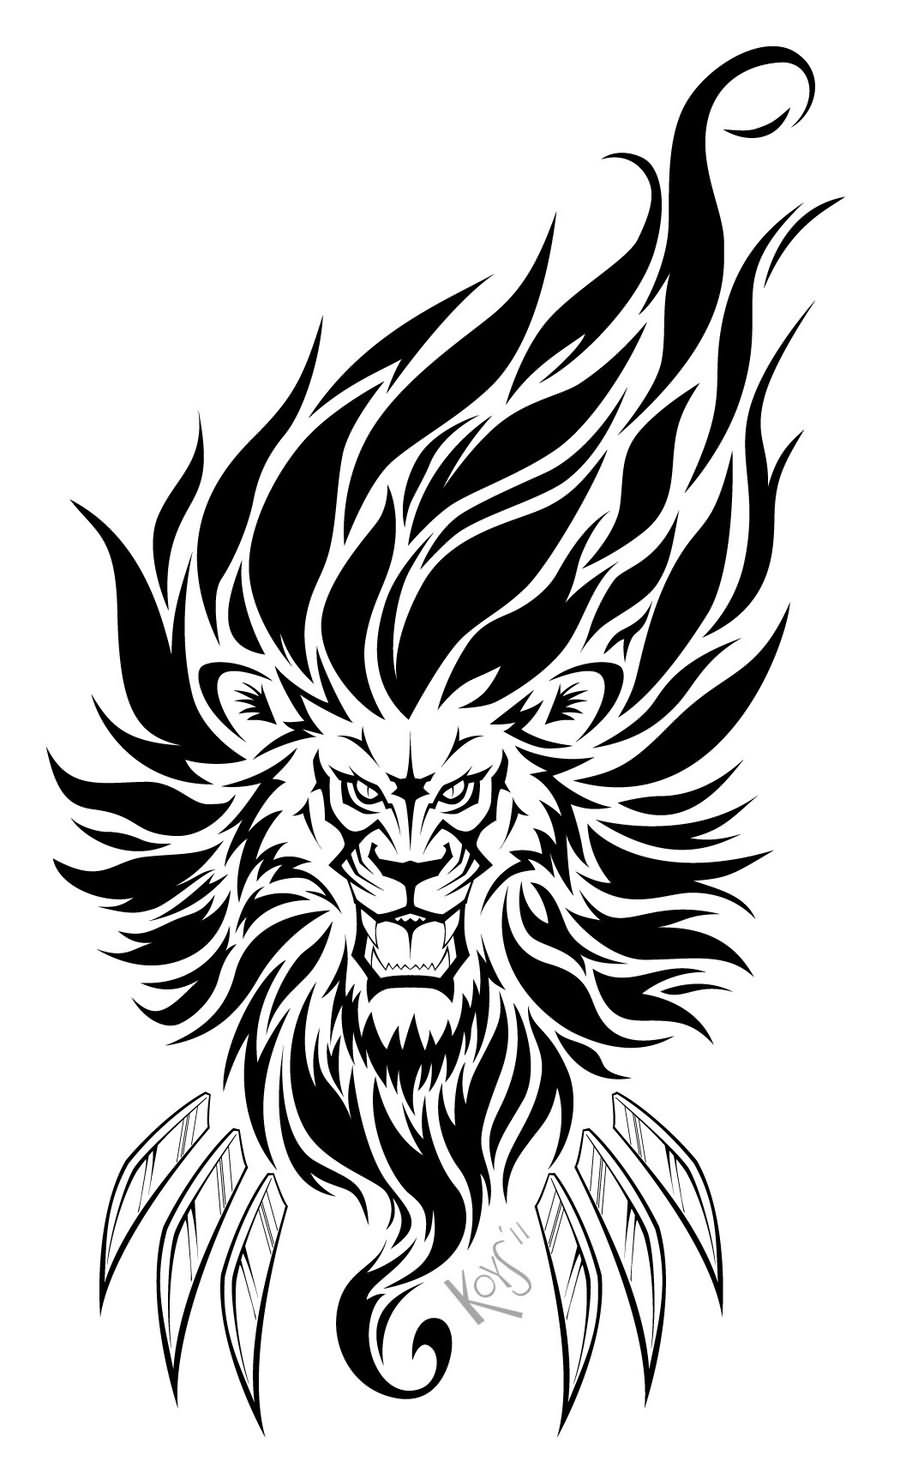 Black Fire Lion Head Tattoo Design by Francogarcia